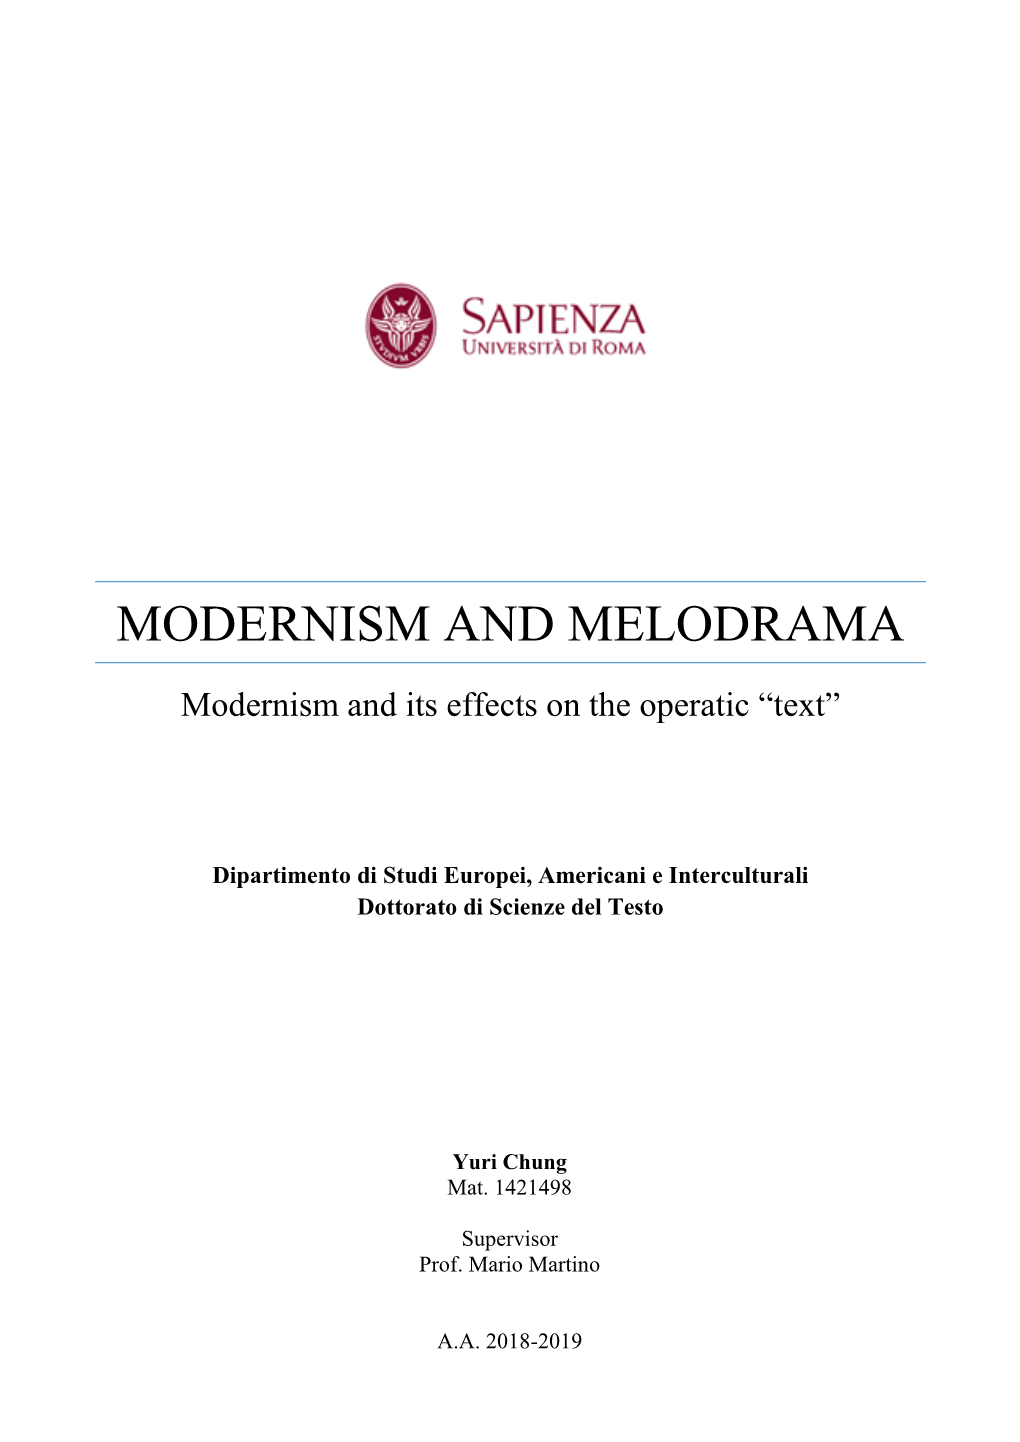 Modernism and Melodrama